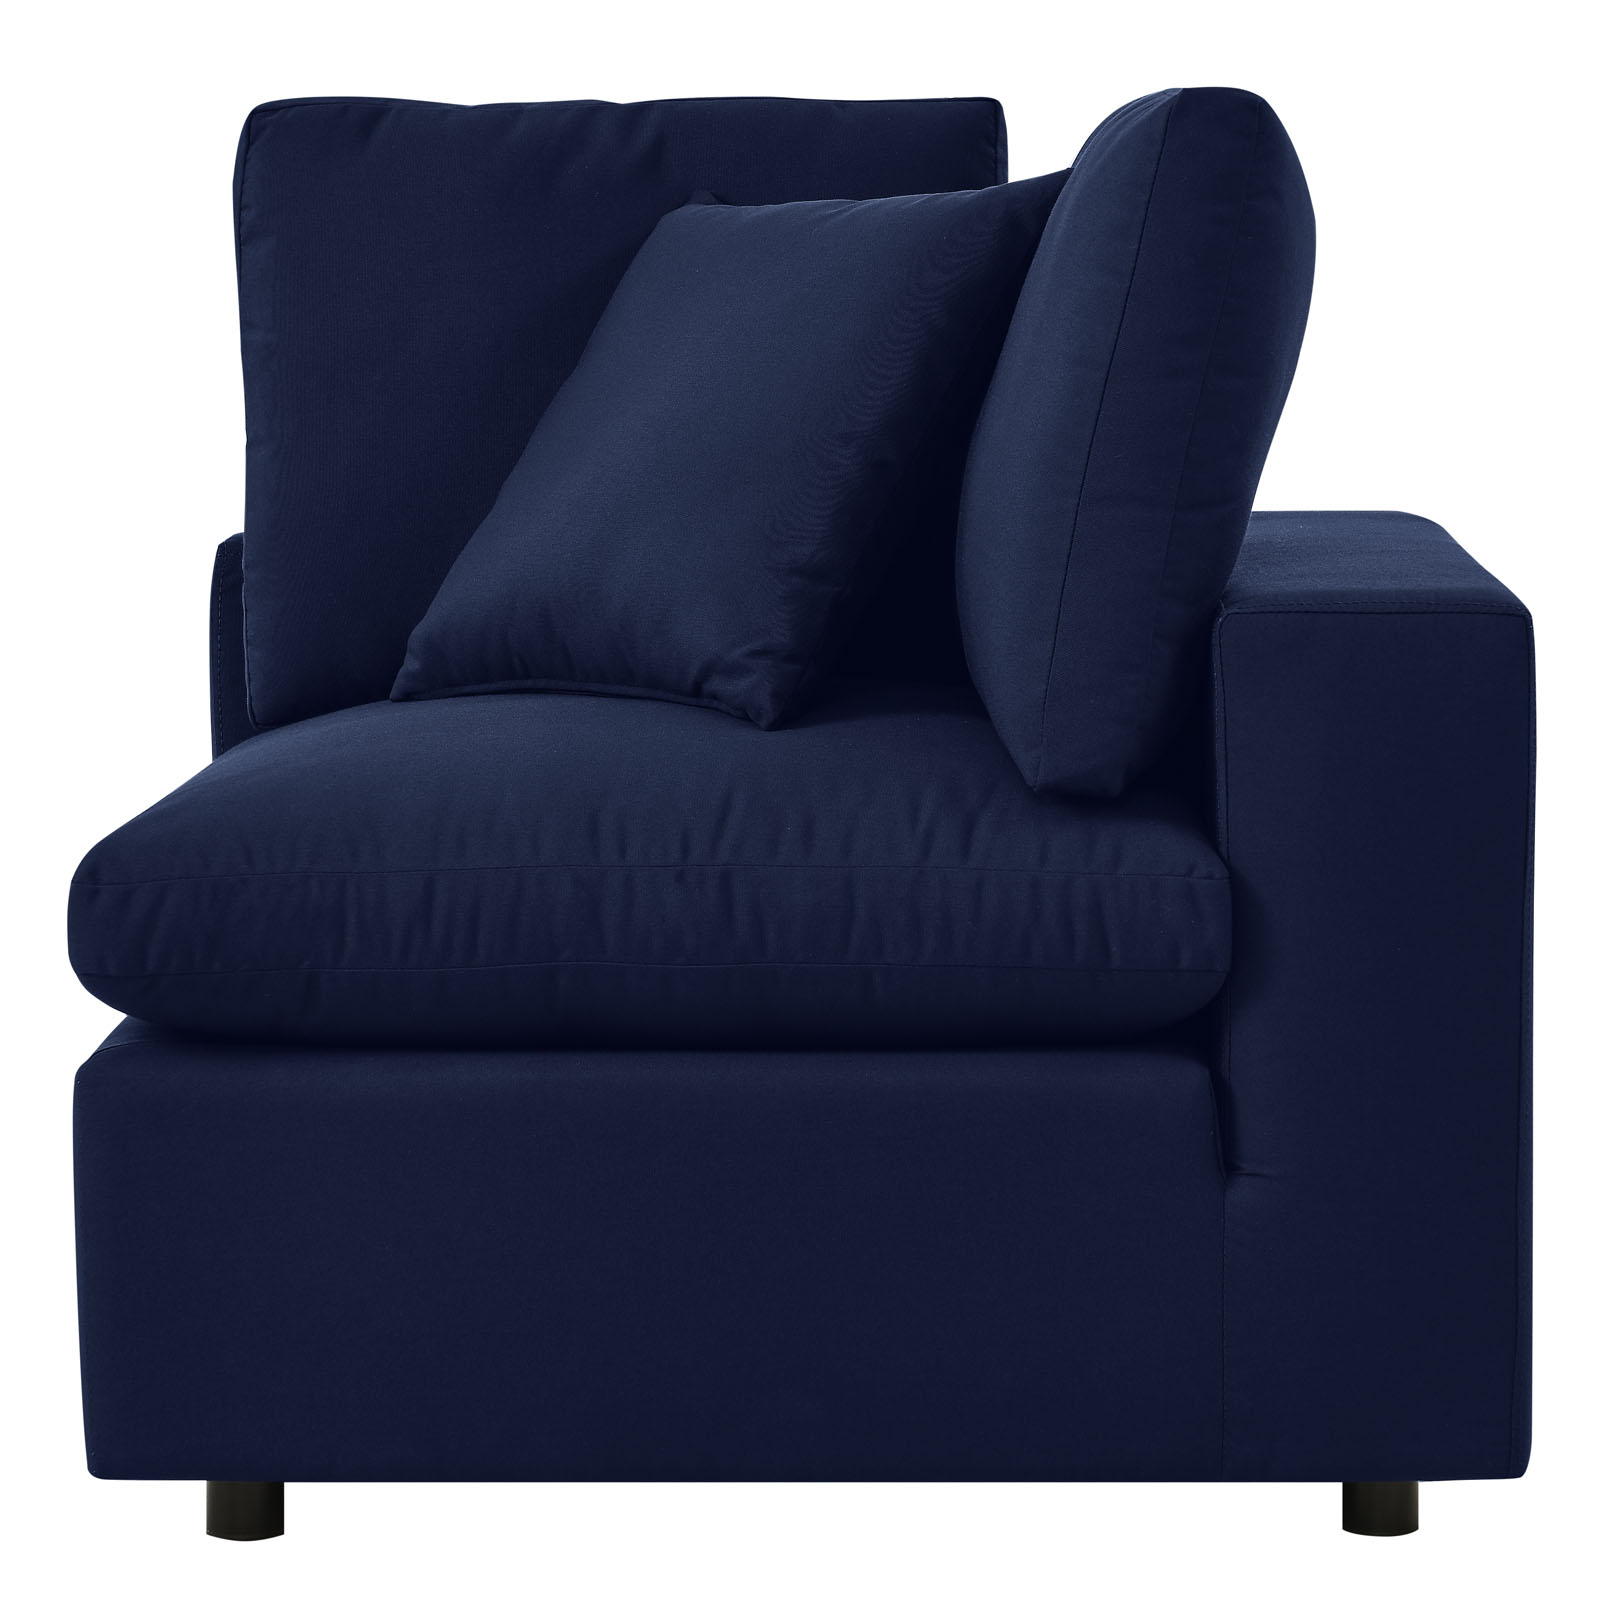 Modular Lounge Sectional Deep Sofa Chair Set, Sunbrella, Blue Navy, Fabric, Modern Contemporary, Outdoor Patio Balcony Cafe Bistro Garden Furniture Hotel Hospitality - image 3 of 10